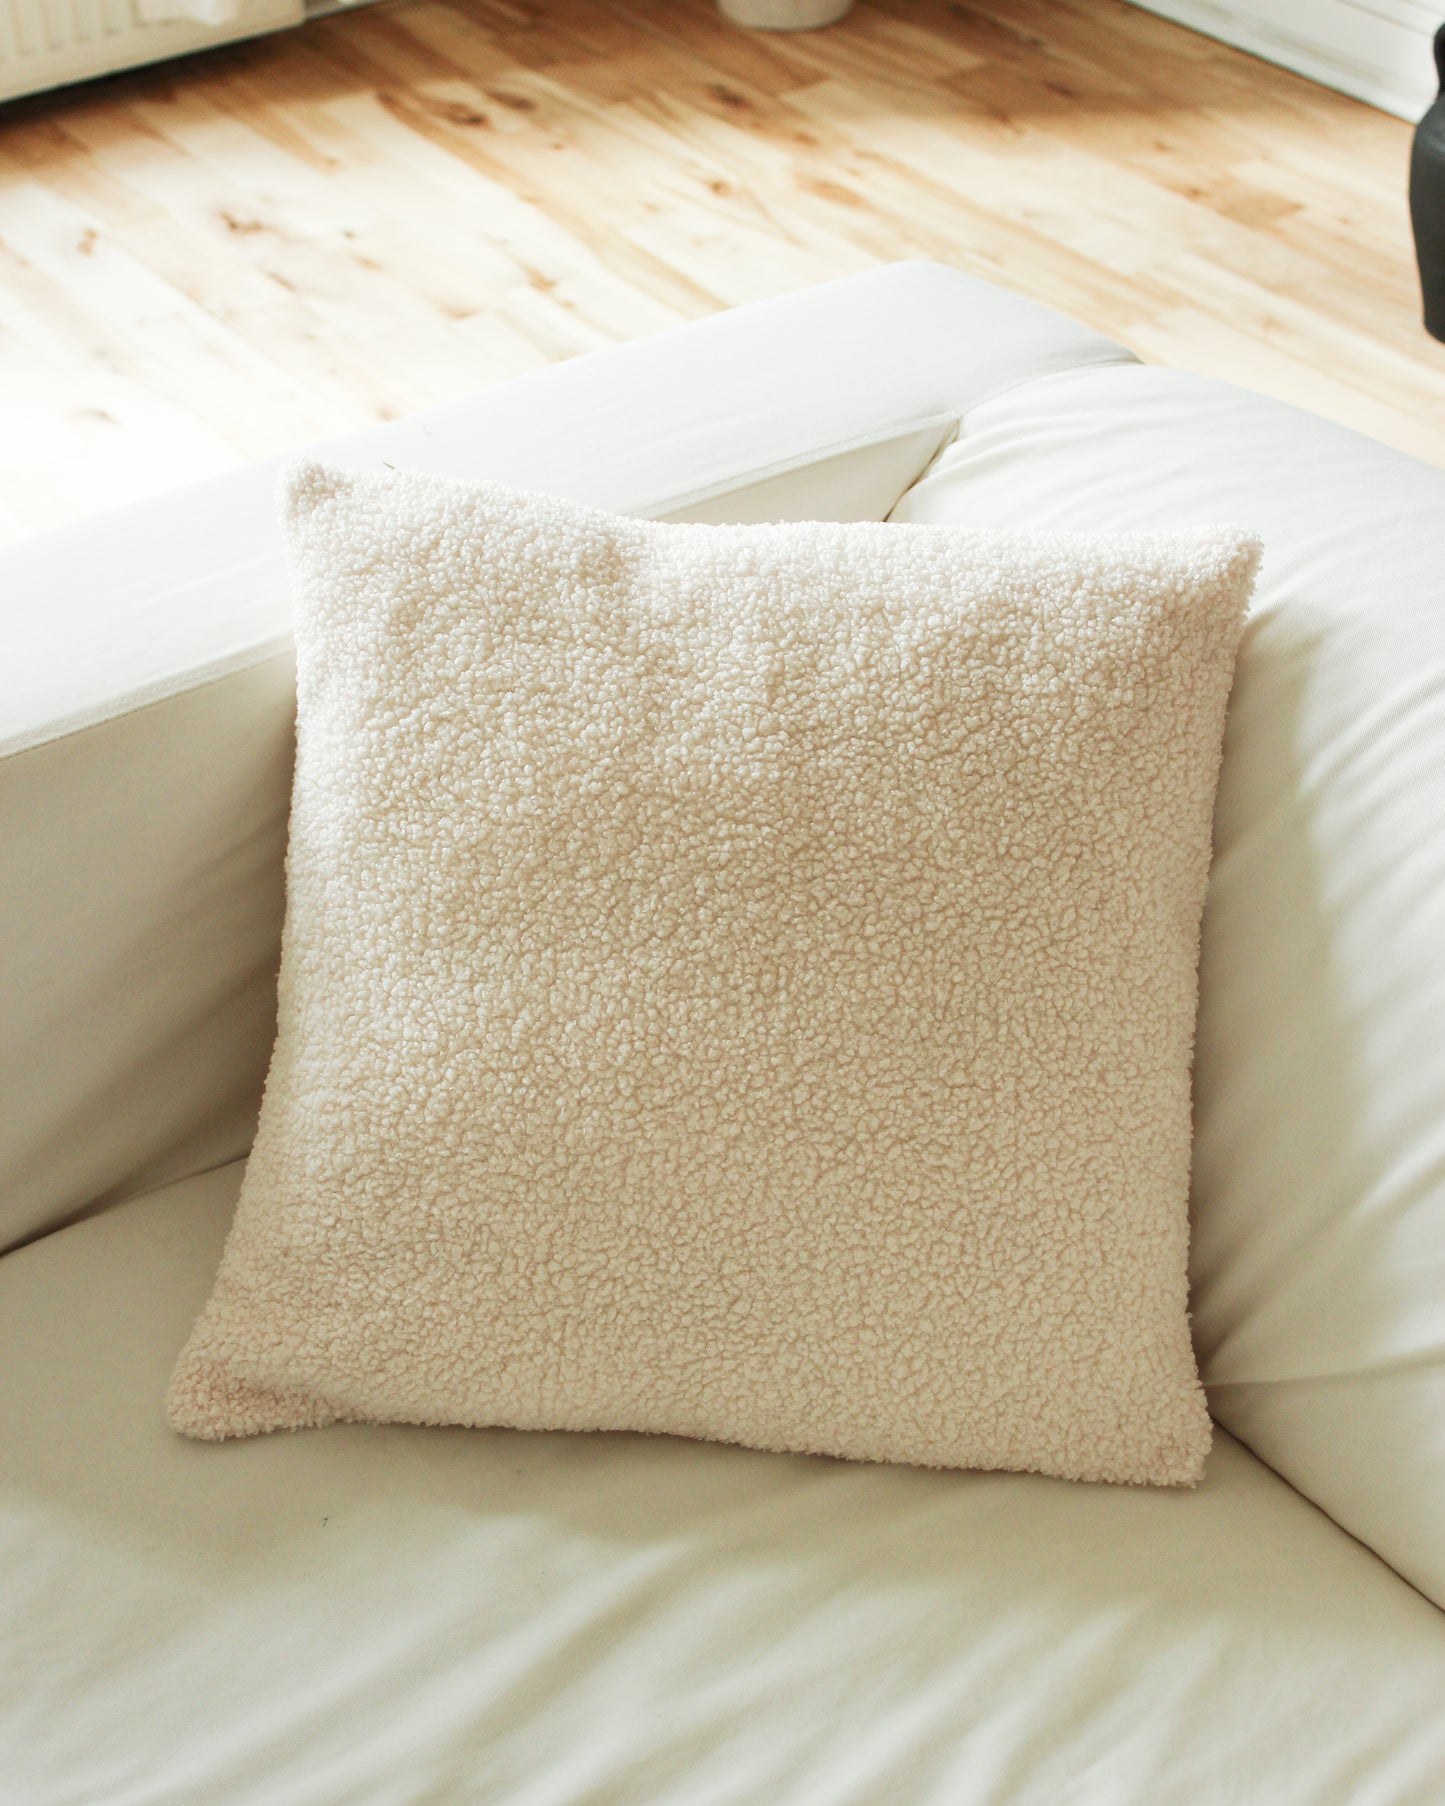 Cozy Boucle Cushion Covers // TEDDY